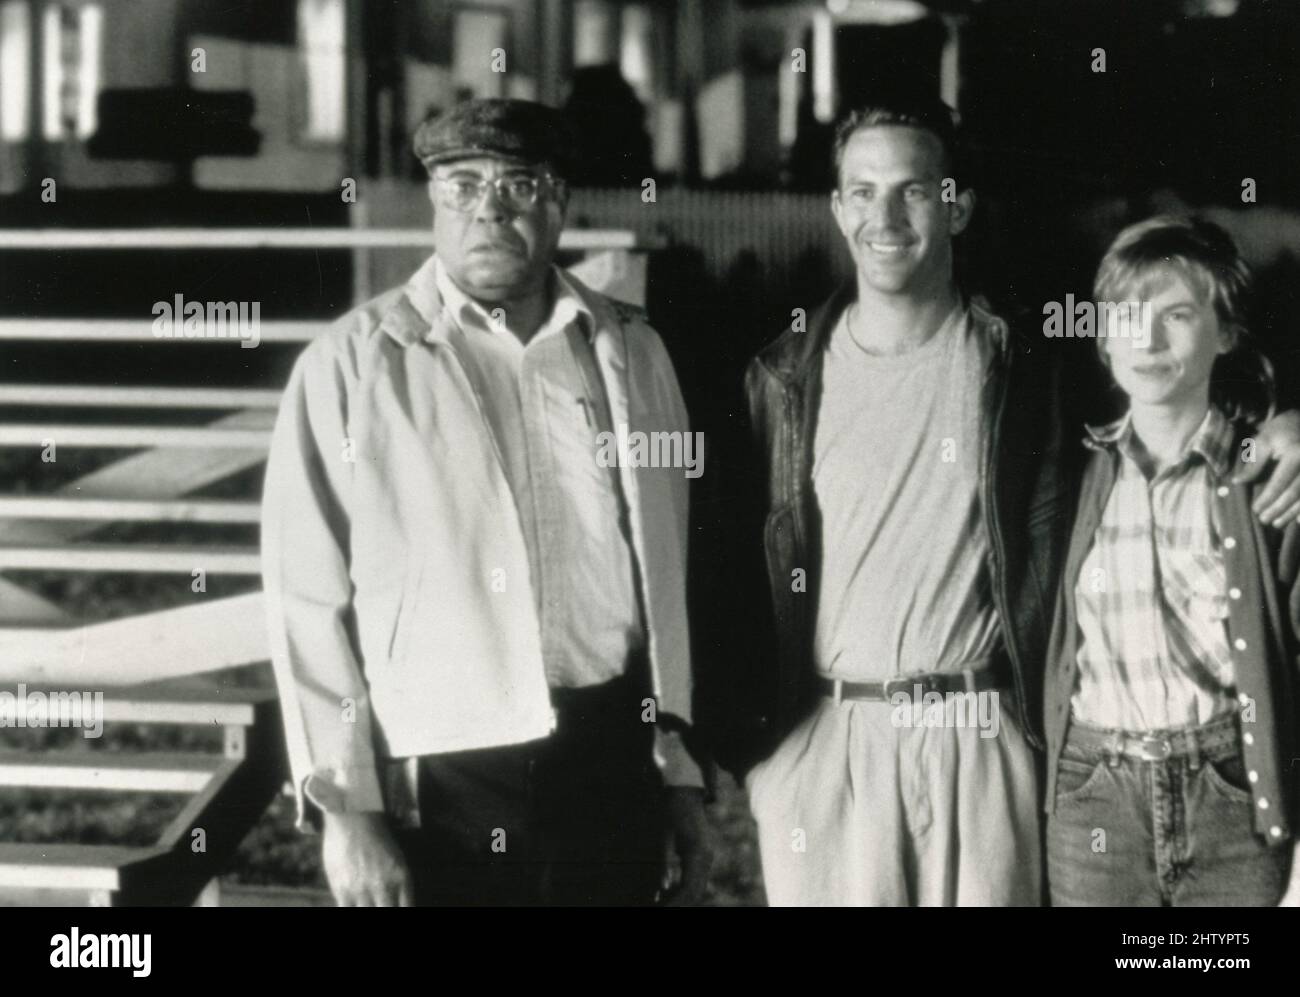 L'acteur américain Kevin Costner, Amy Madigan, et James Earl Jones dans le film Field of Dreams, USA 1989 Banque D'Images